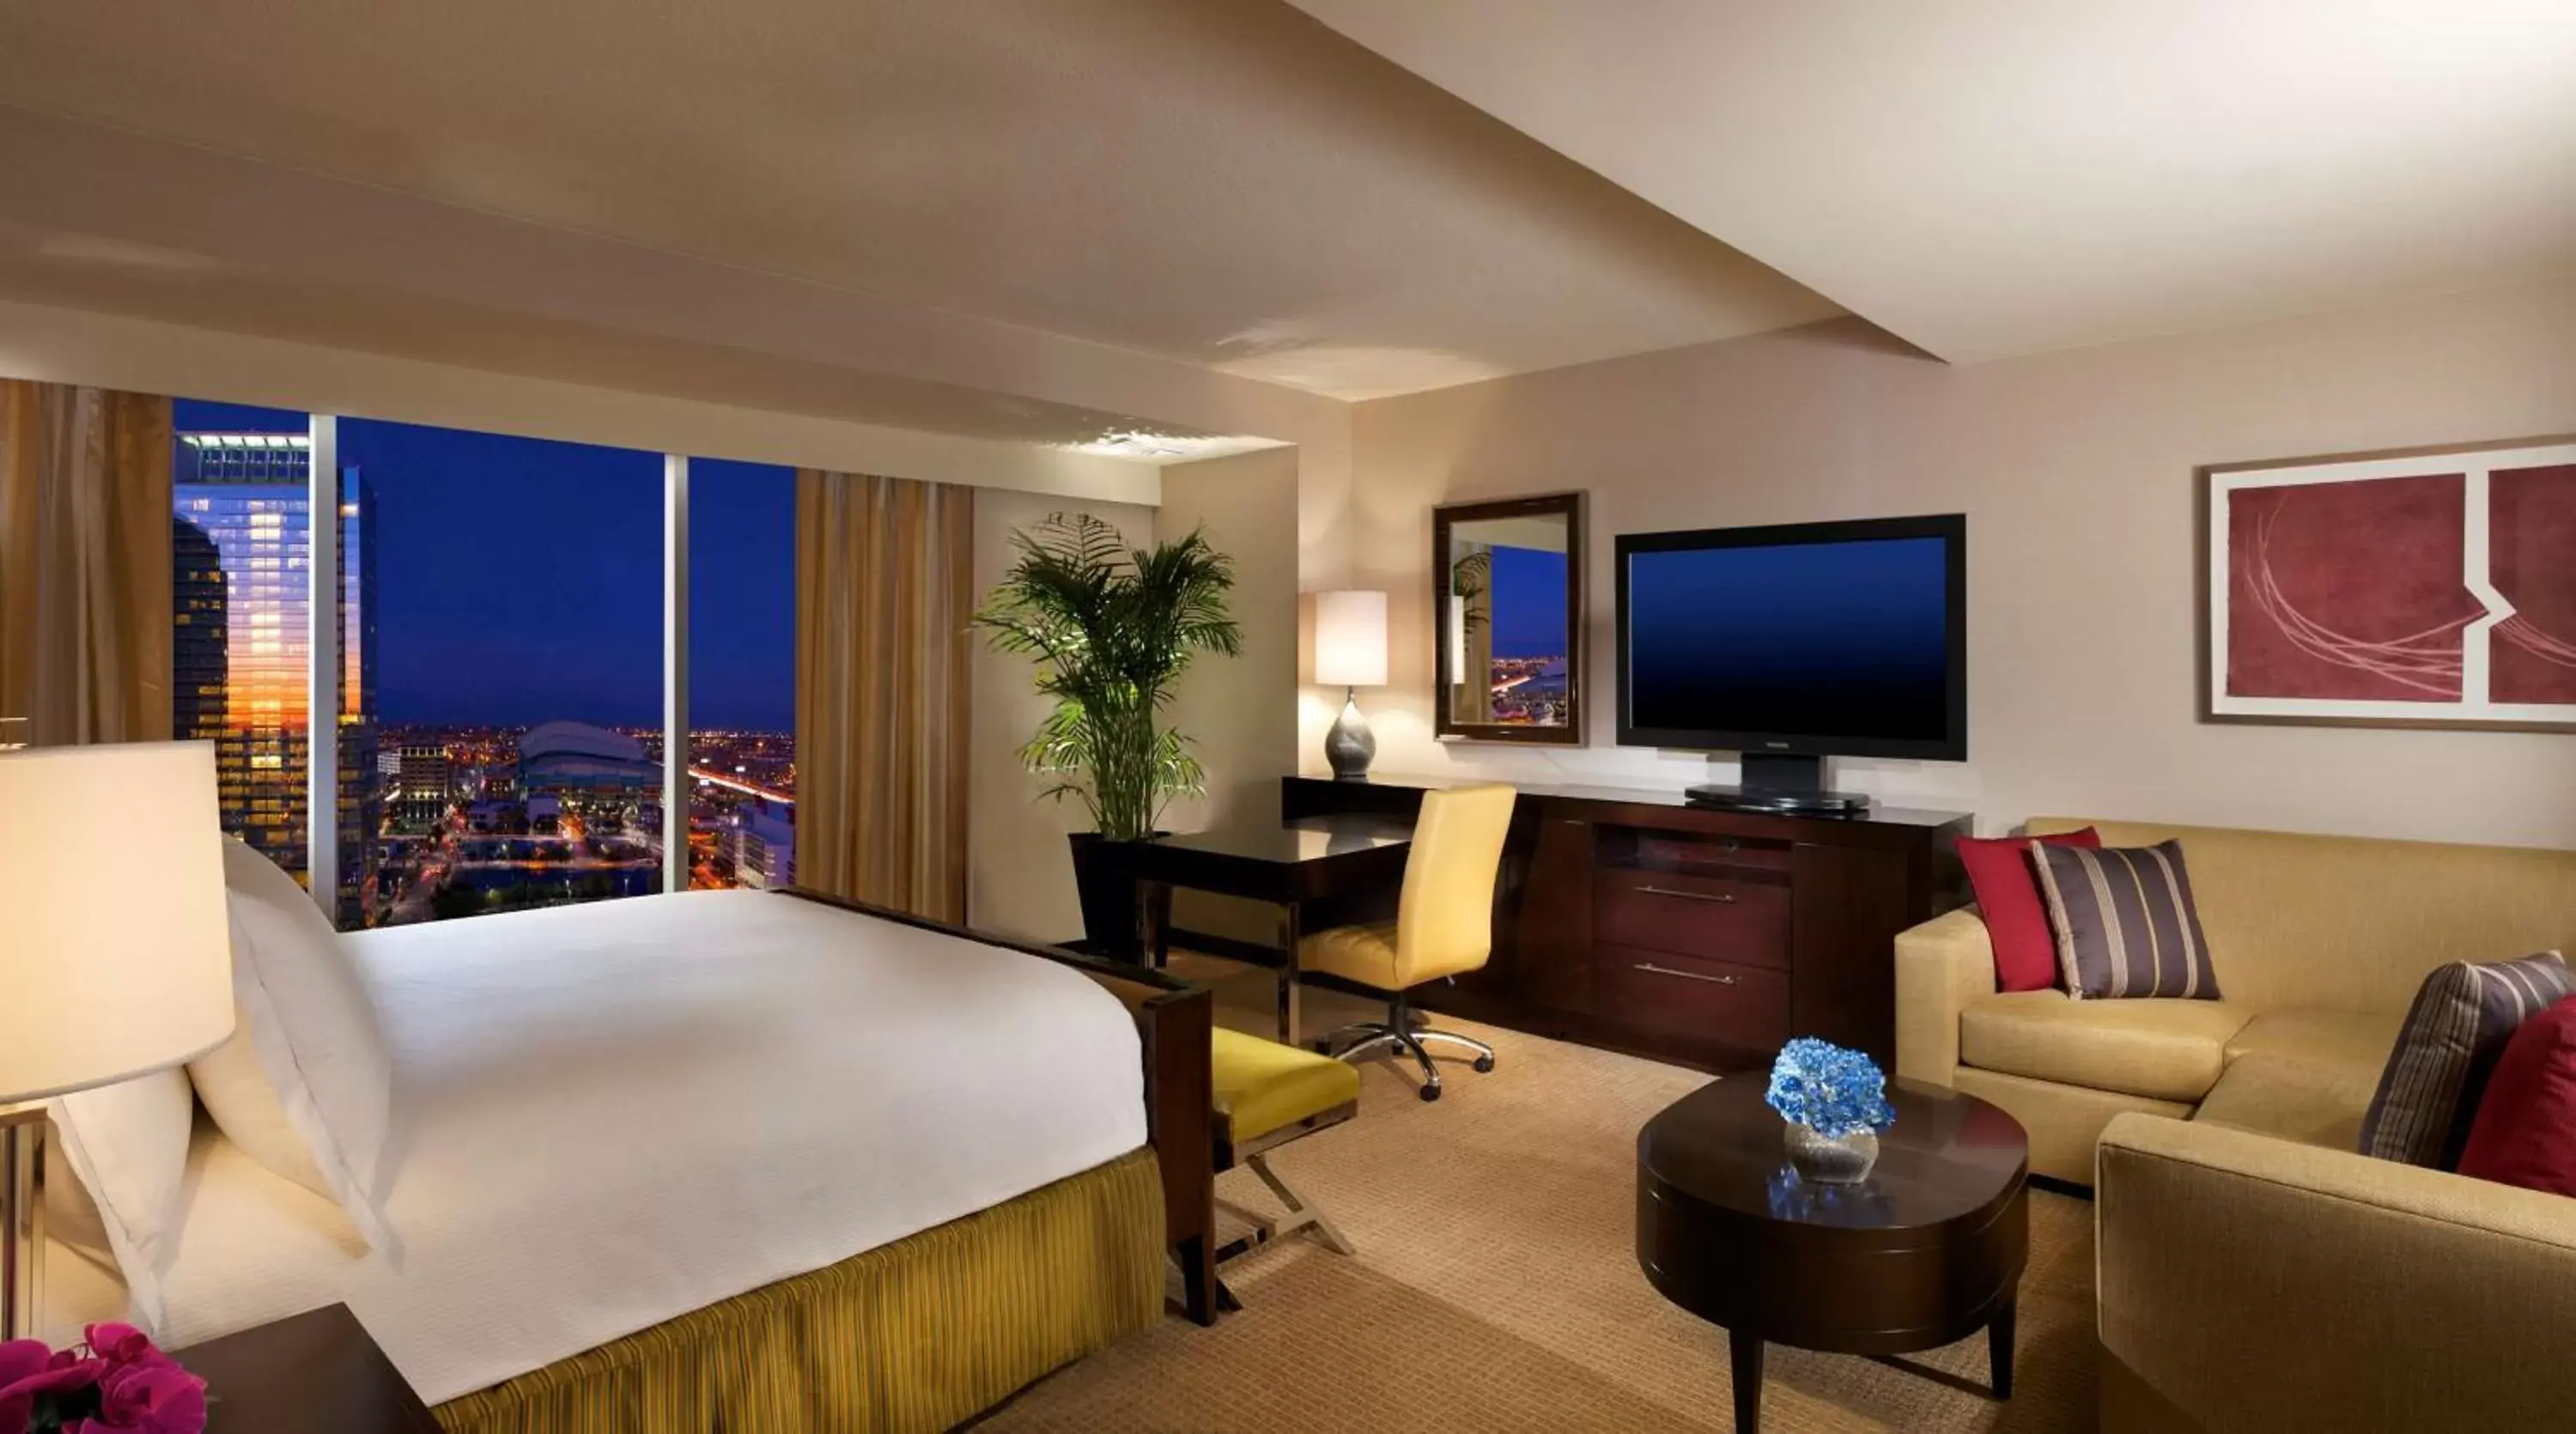 Bedroom in Hilton Americas- Houston